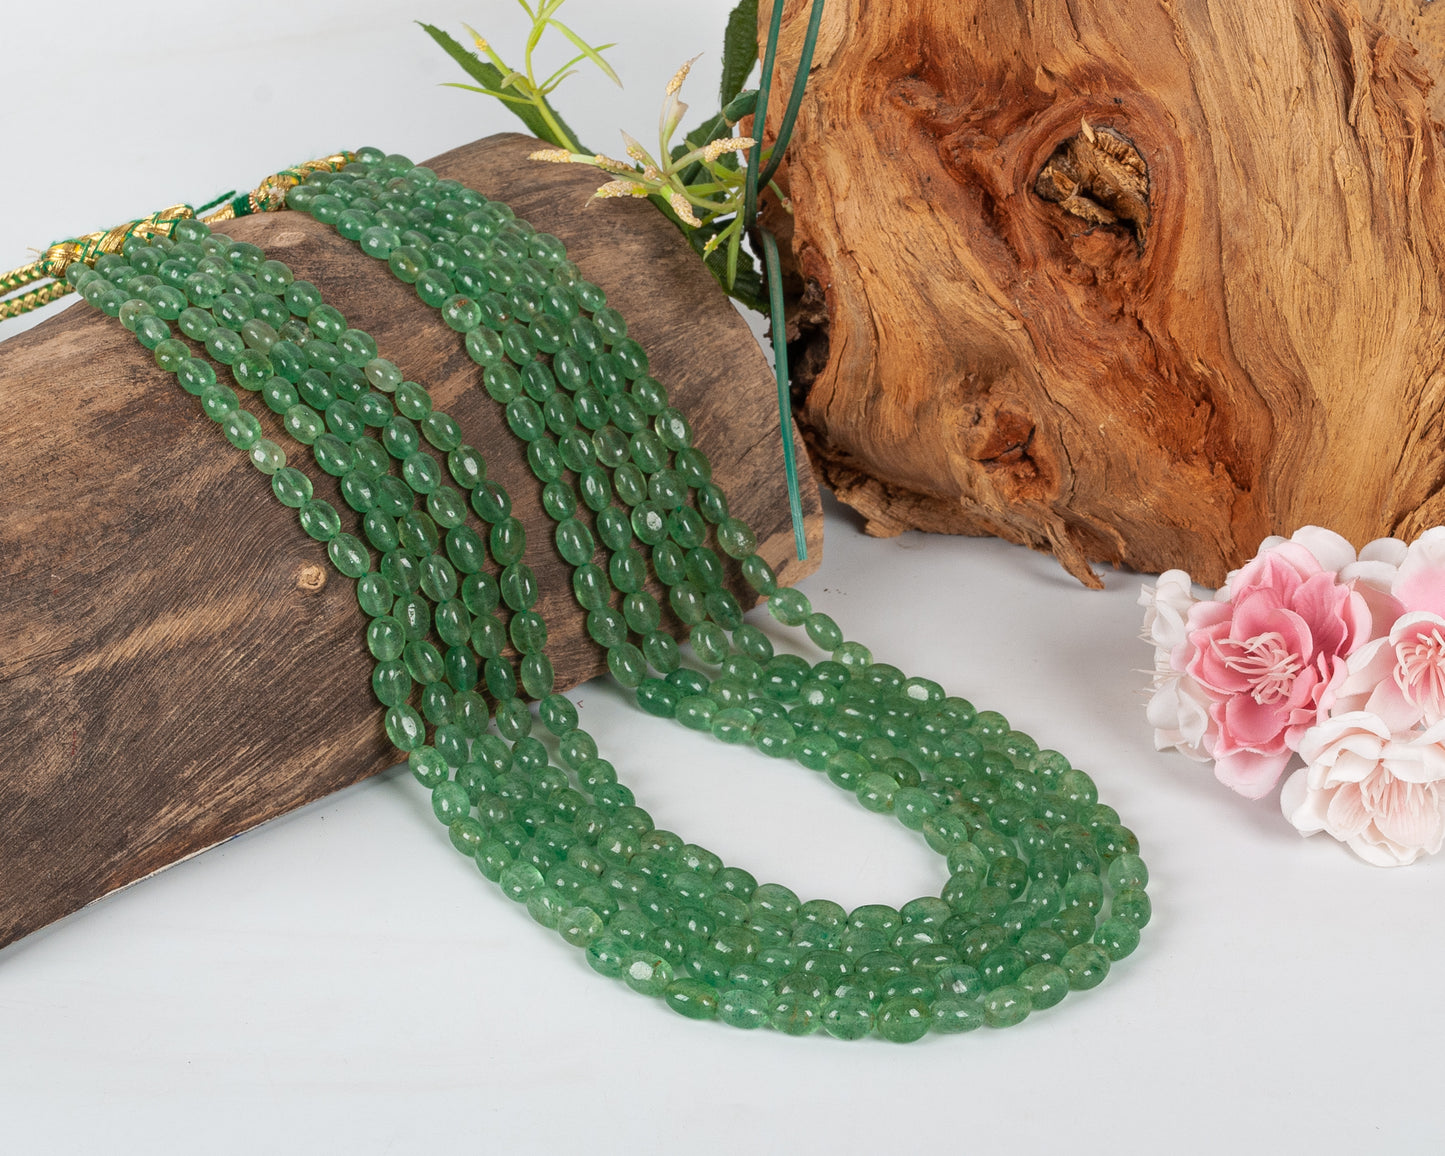 Natural Green Strawberry Quartz Gemstone Oval Beads Necklace Jewelry